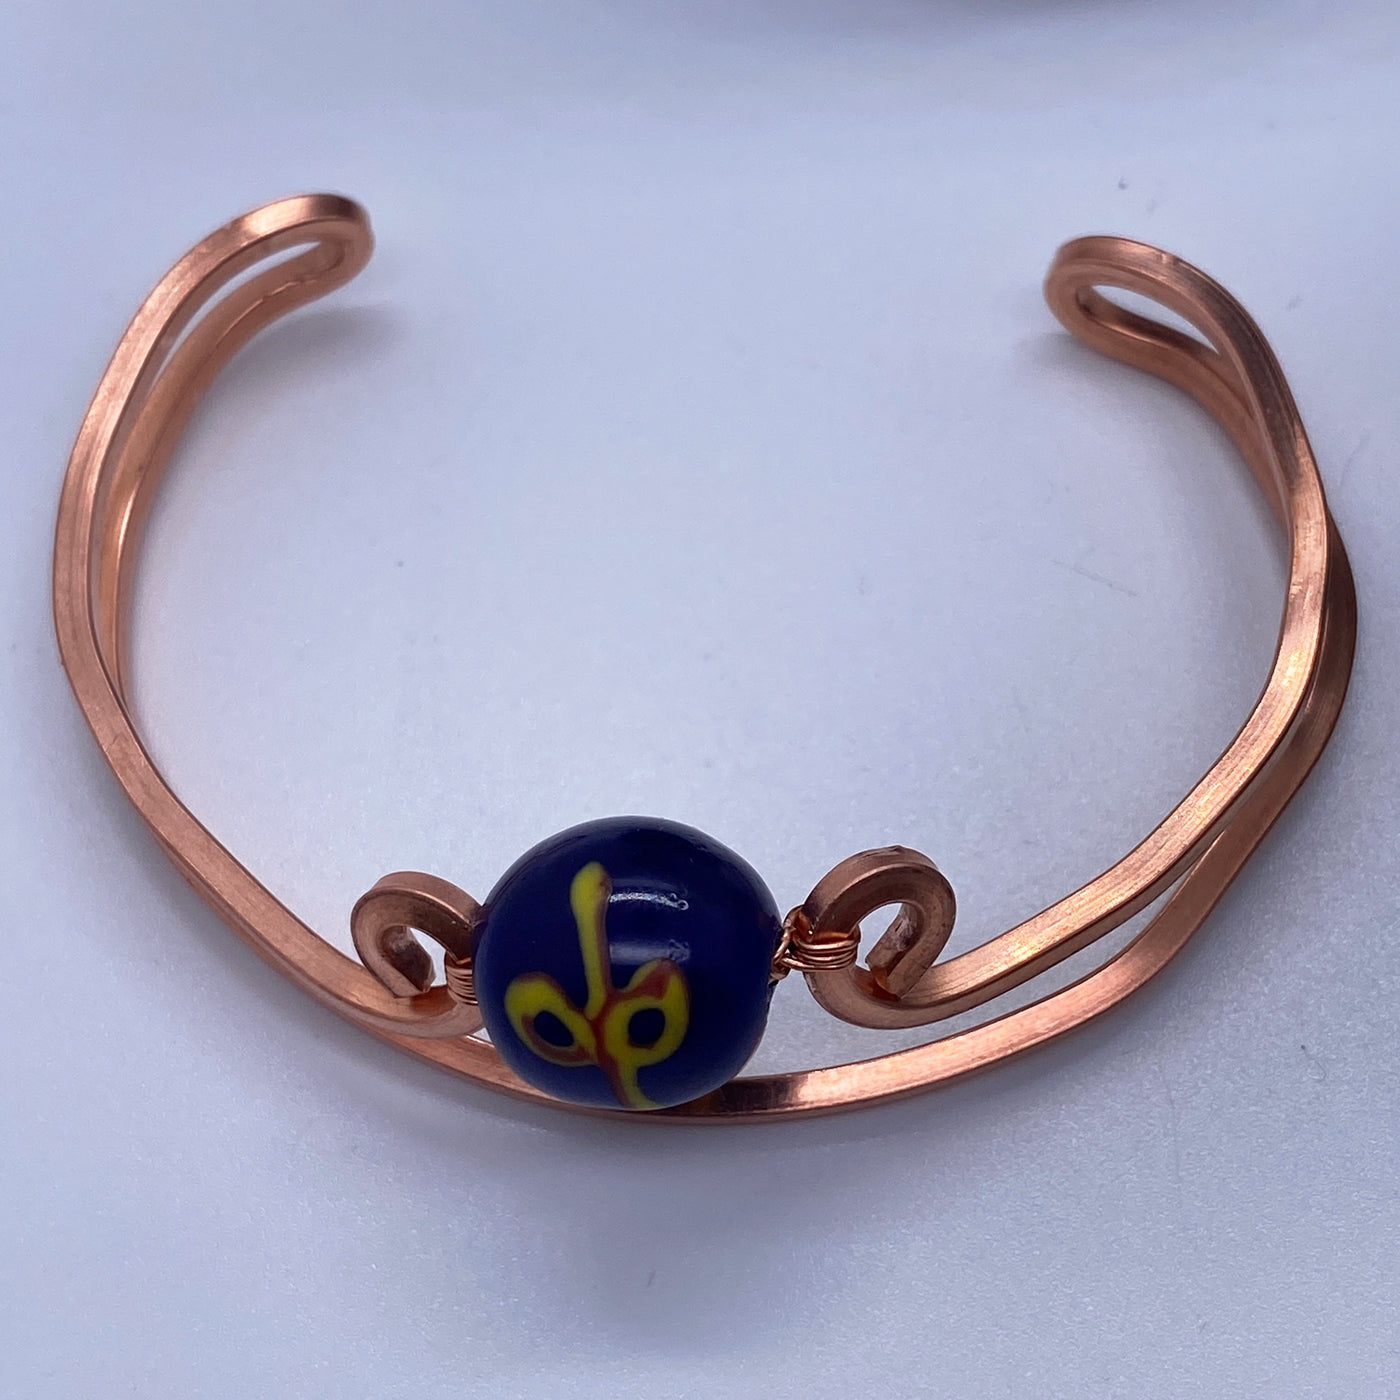 Bronze brass adjustable bracelet with hand inlaid java bead